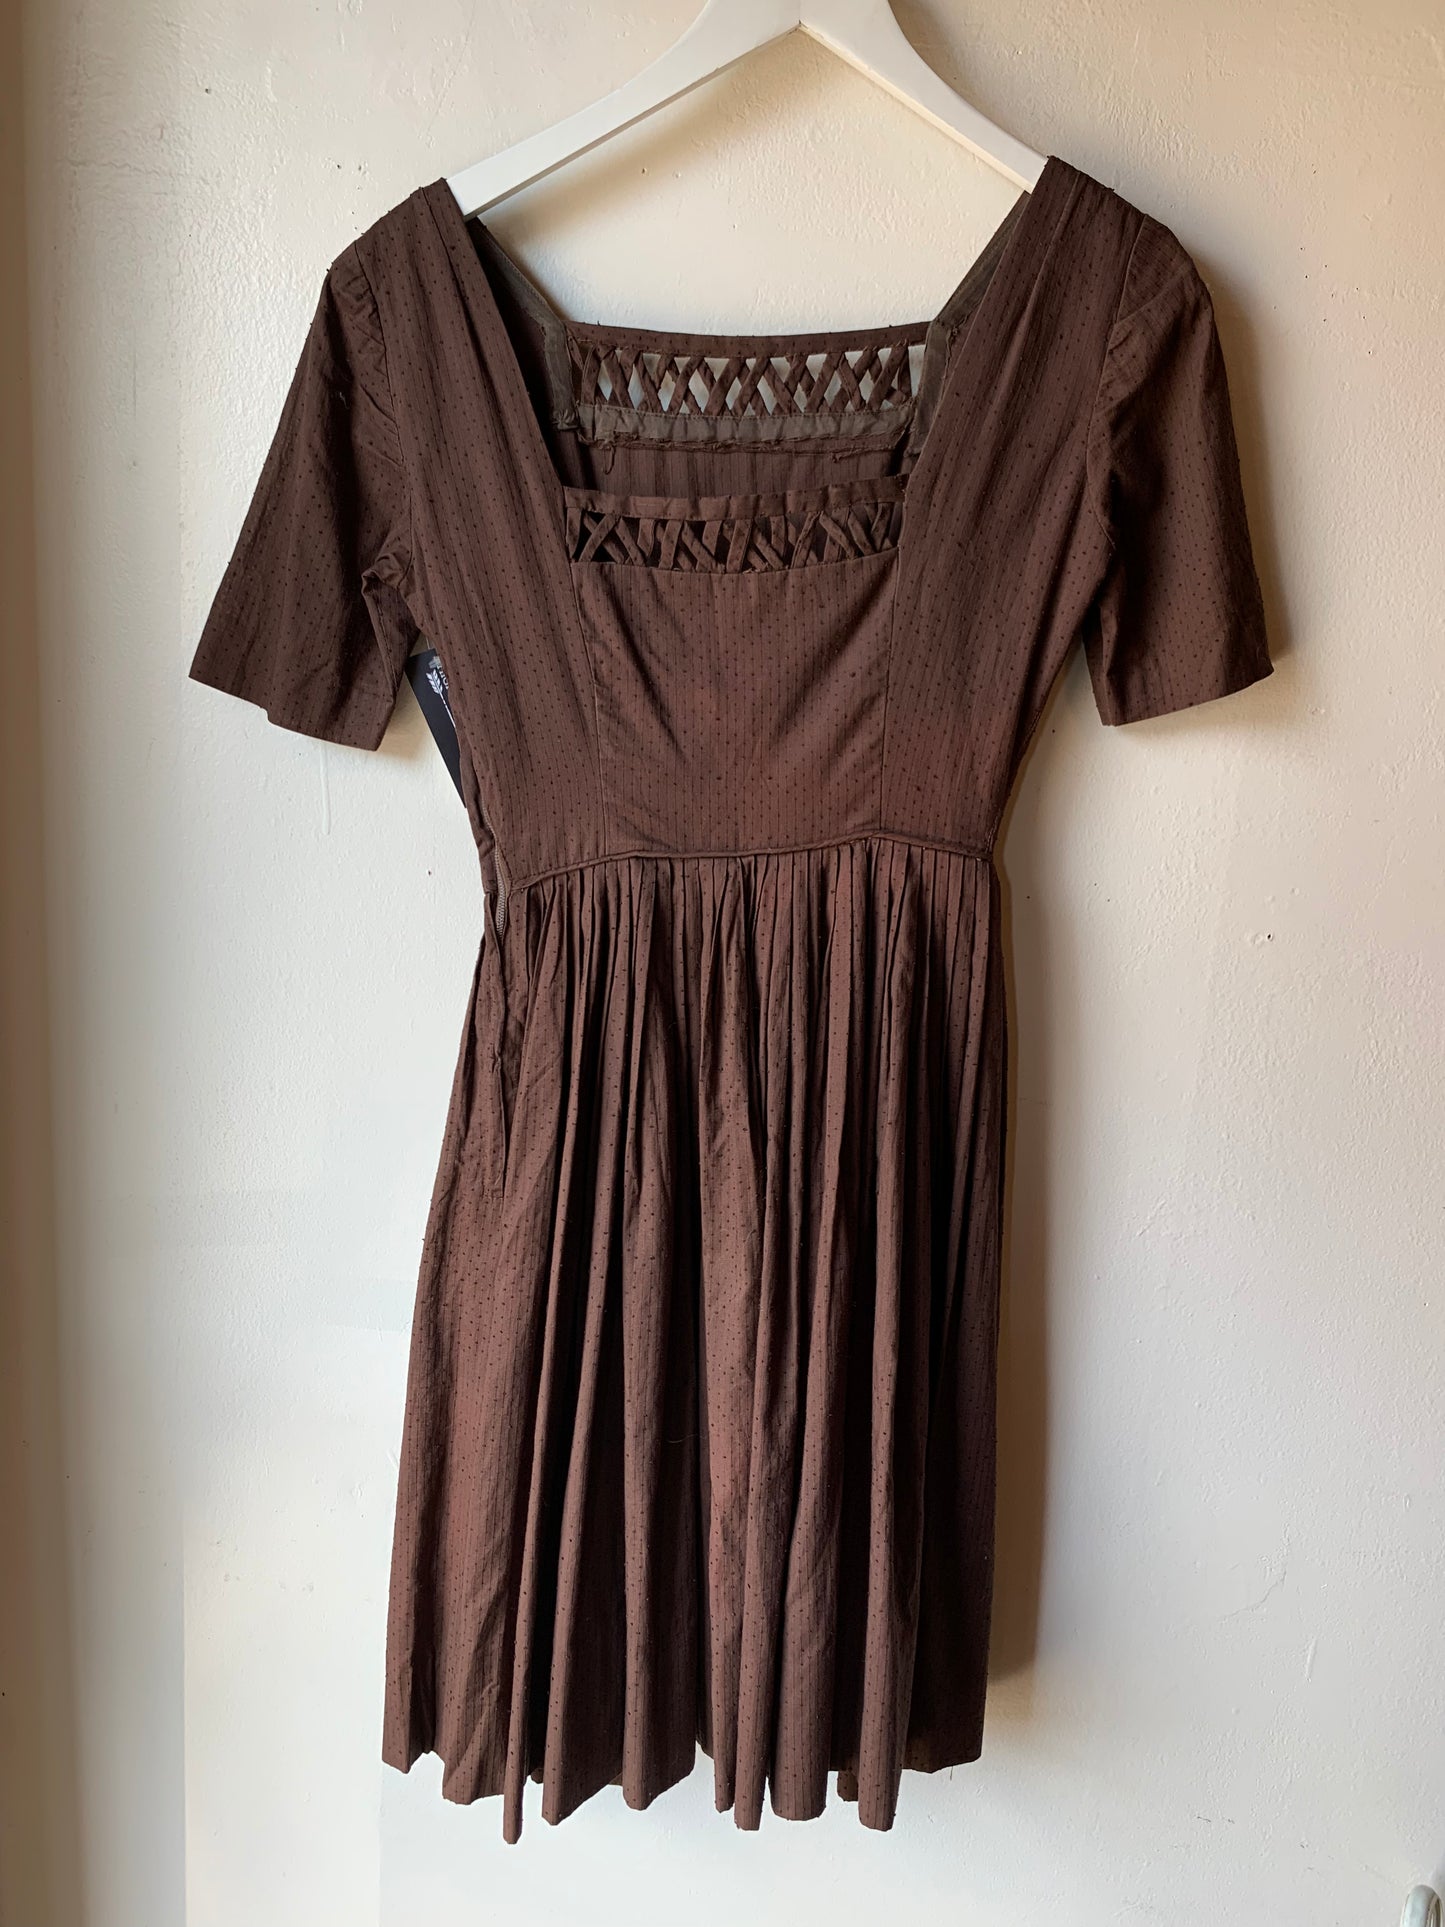 1950s Chocolate Brown Square Dance Dress (XS)